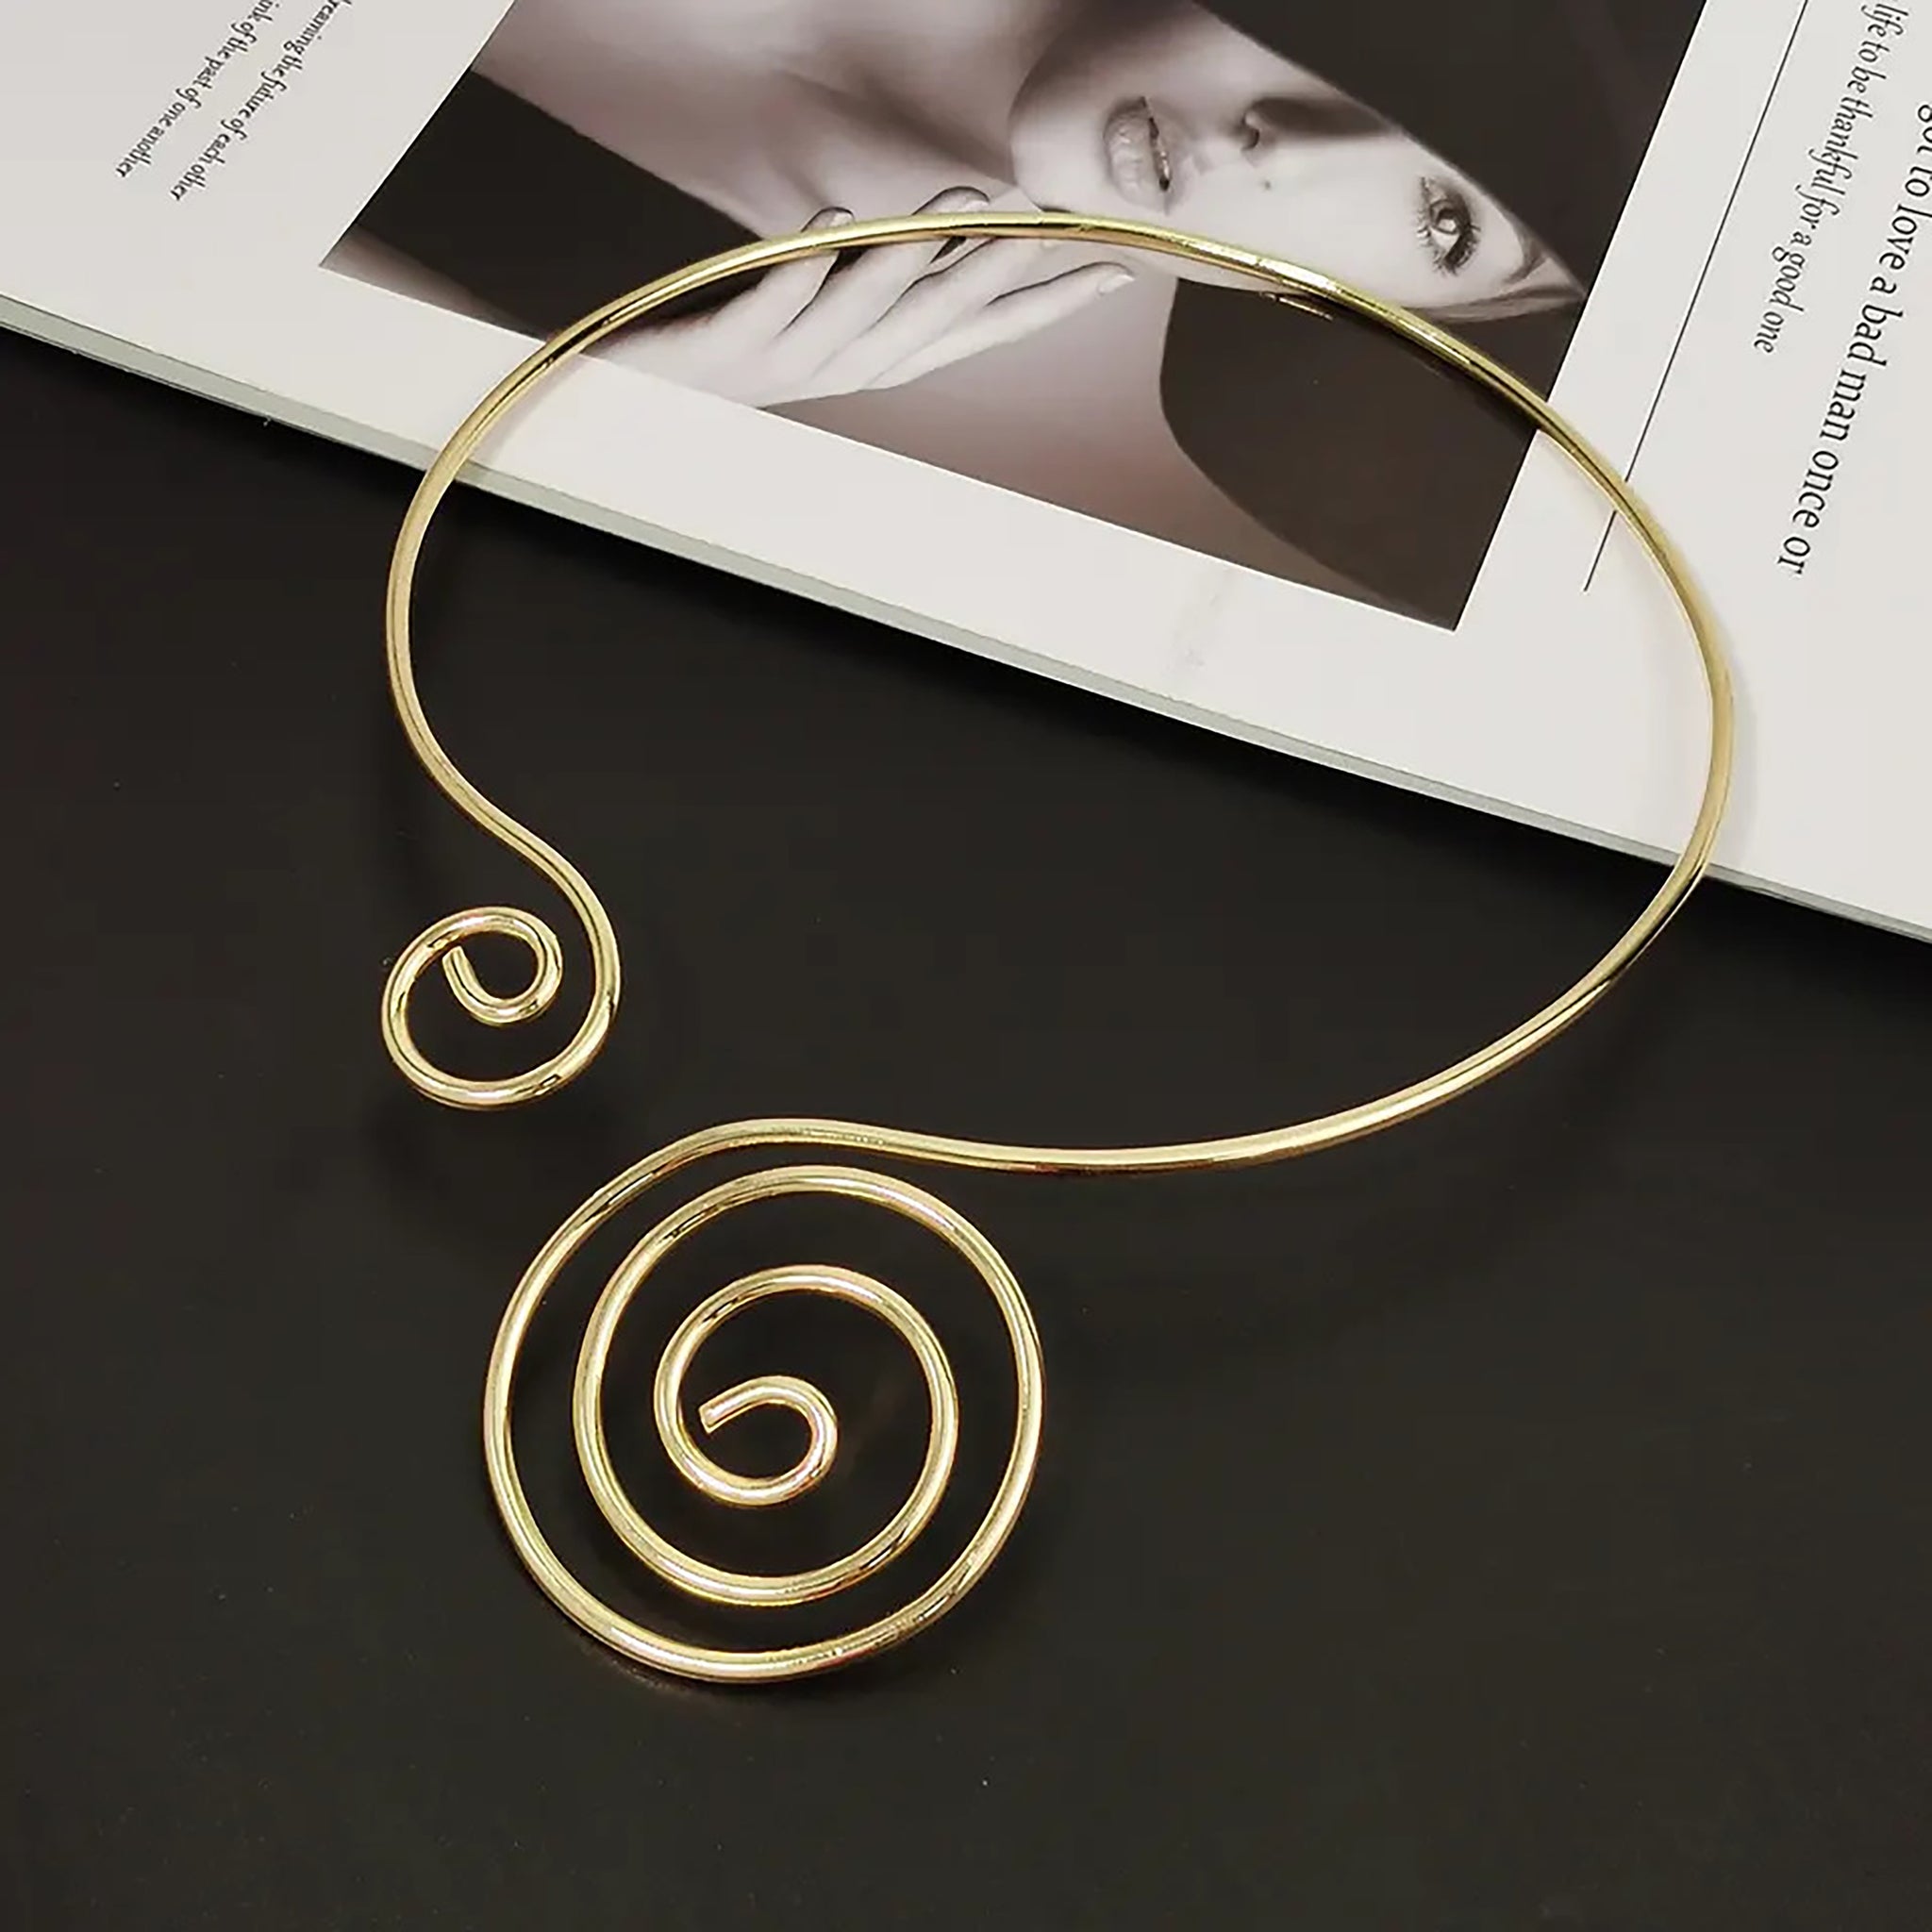 Chokore Double Spiral Choker Necklace (Gold)